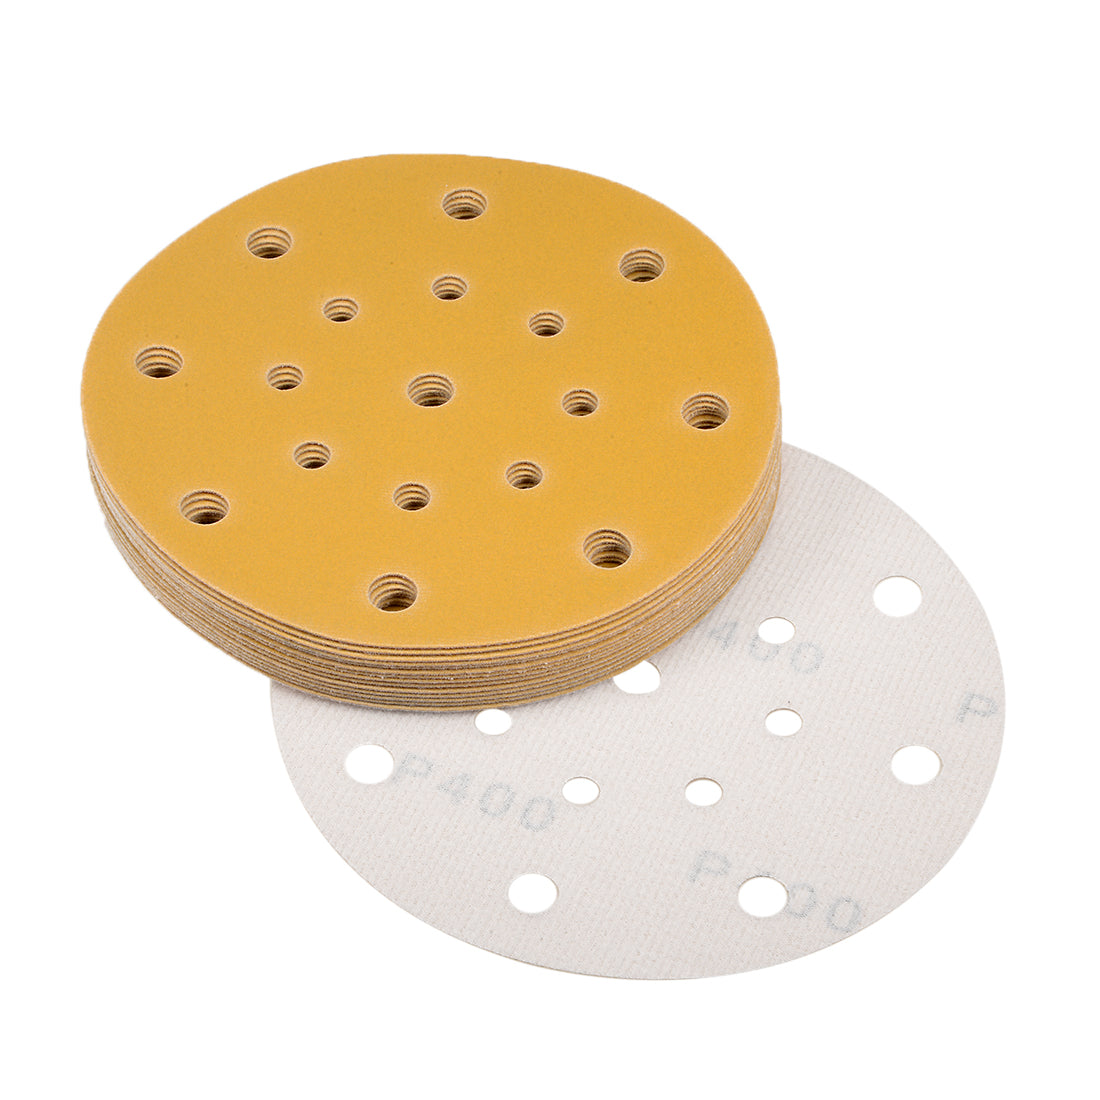 Uxcell Uxcell 6-inch Sanding Discs, 400-Grits 17-Holes Hook and Loop Wet Dry Flocking Sandpaper Sander Sand Paper for Random Orbital Sander 15pcs